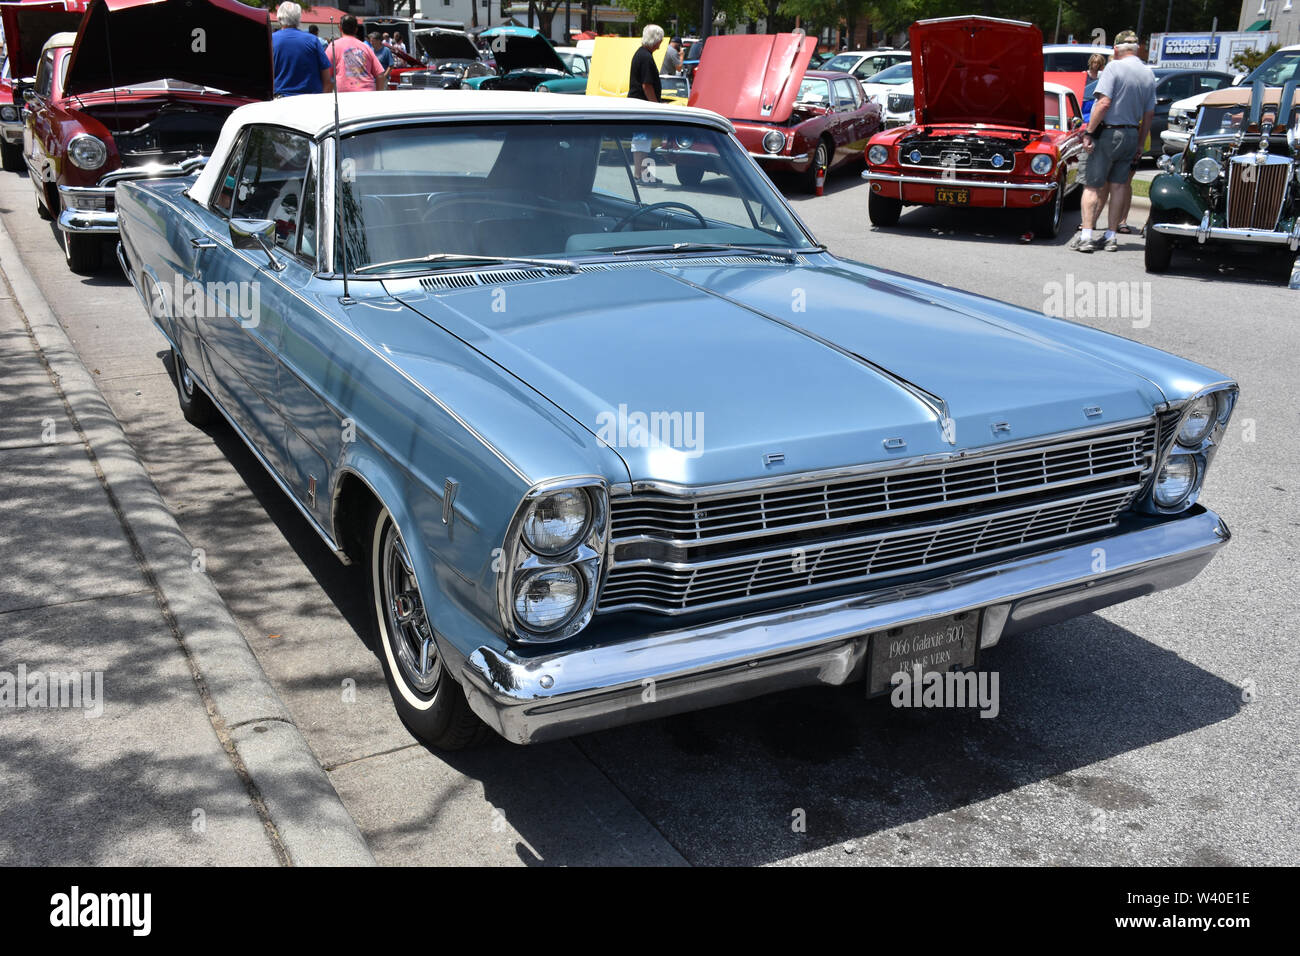 https://c8.alamy.com/comp/W40E1E/a-1966-ford-galaxy-500-convertible-on-display-at-a-car-show-W40E1E.jpg